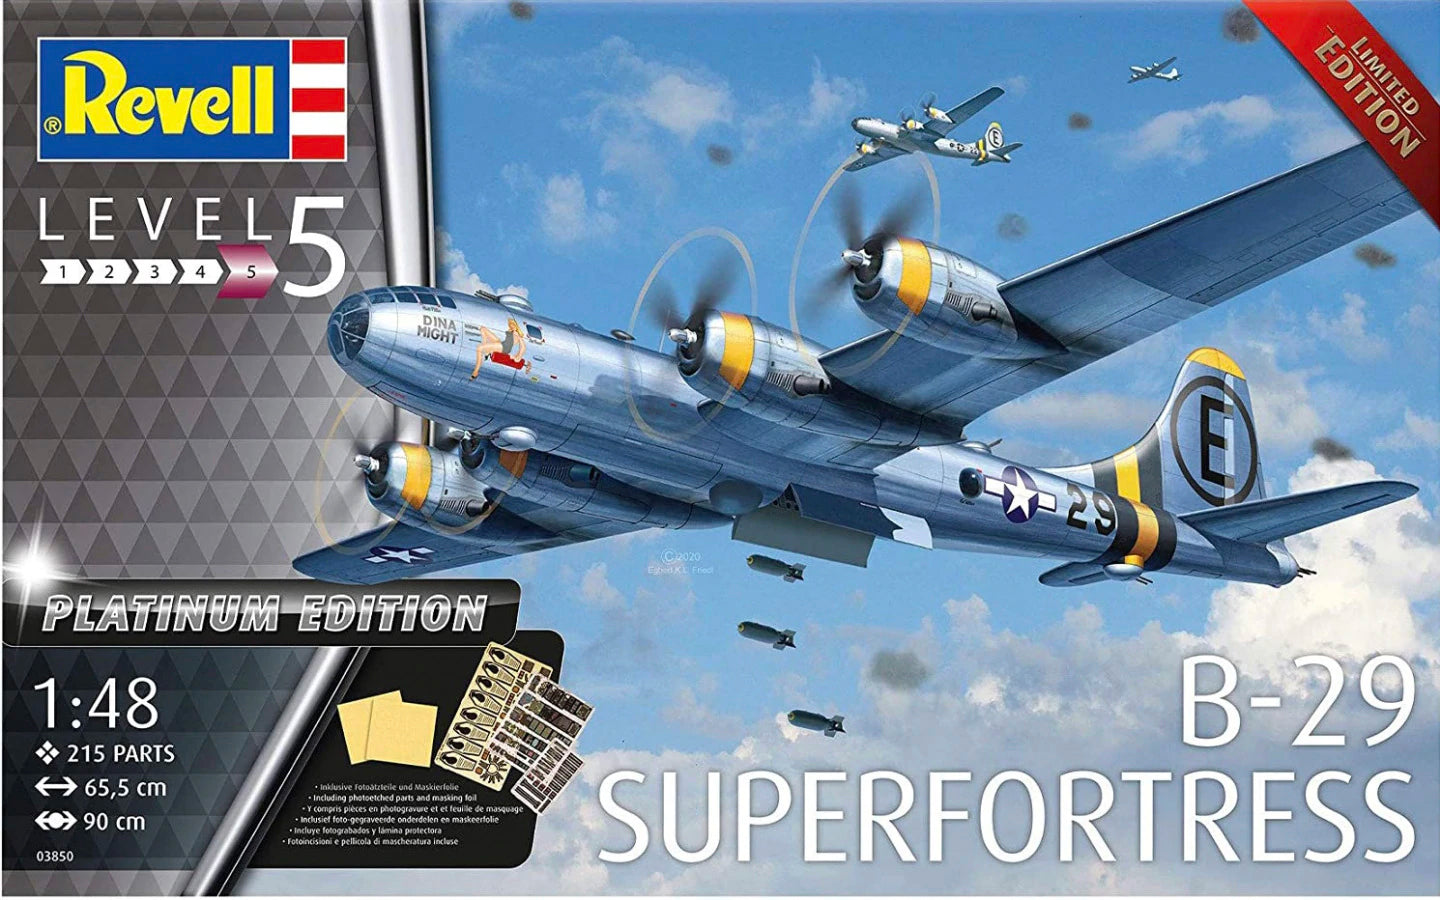 Revell 1/48 US B-29 Superfortress Platinum Edition 3850